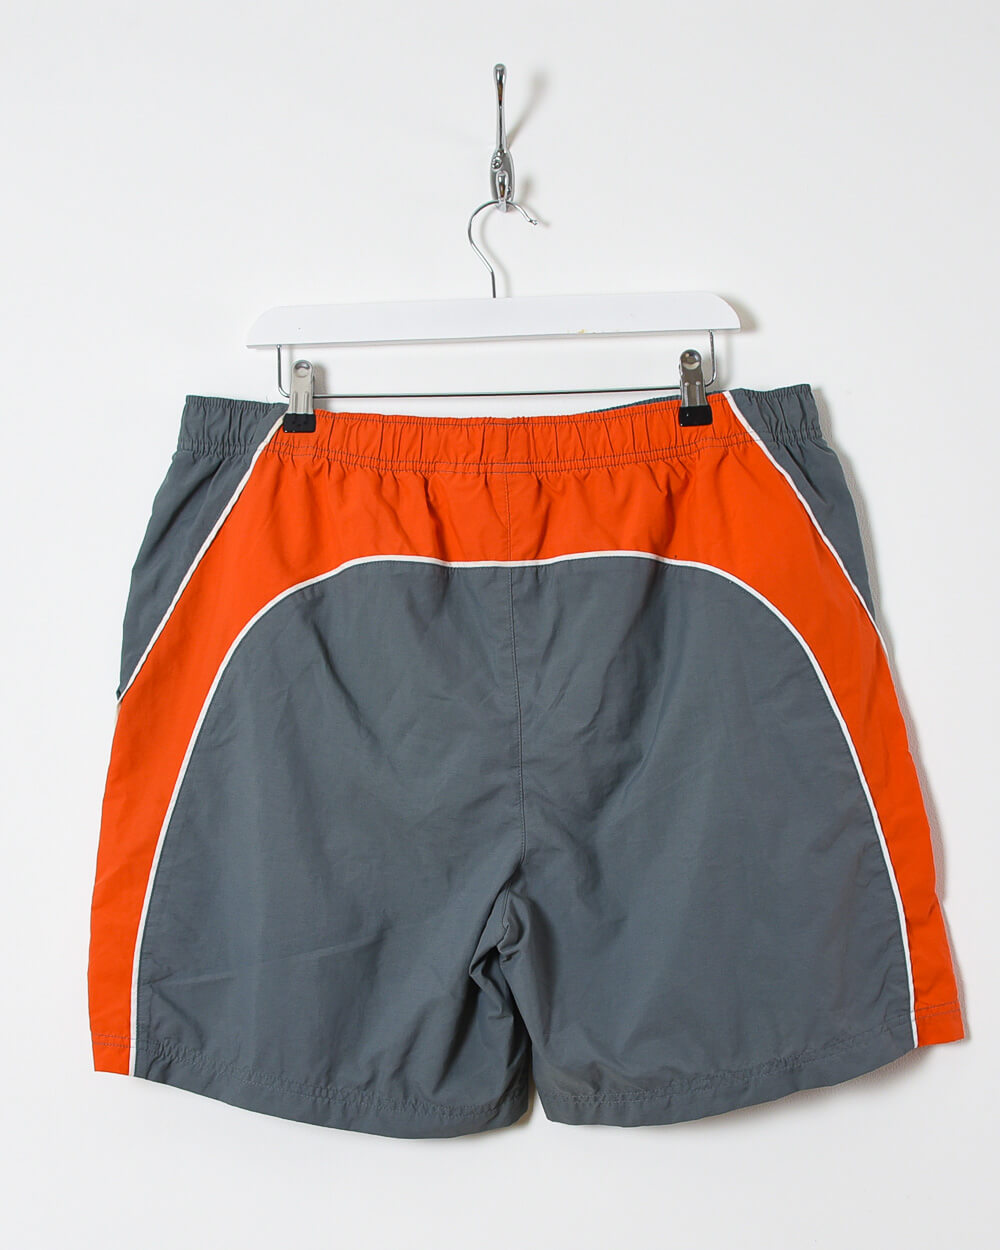 Nike Swimwear Shorts - W36 - Domno Vintage 90s, 80s, 00s Retro and Vintage Clothing 